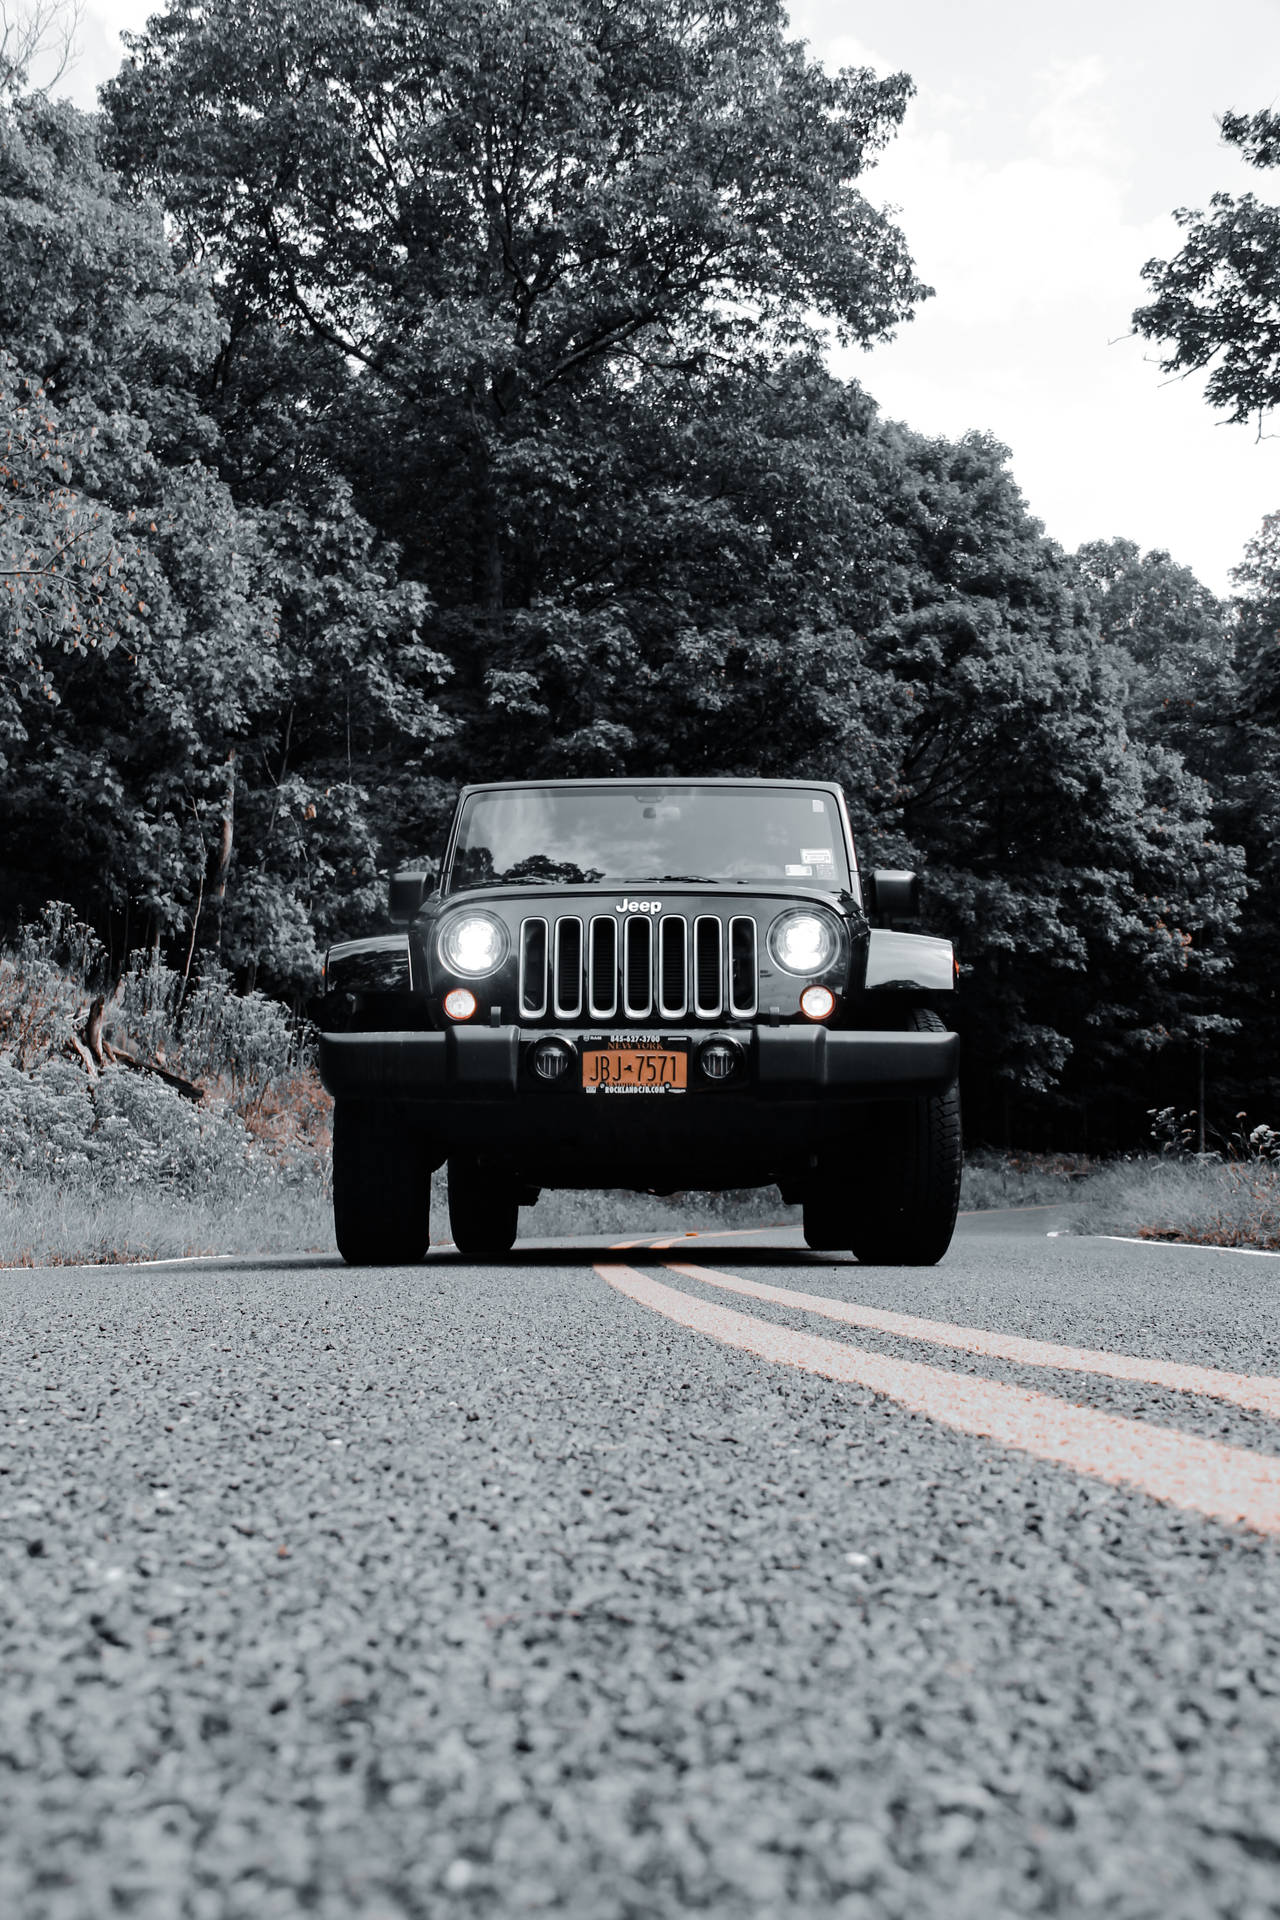 Coal-black Wrangler Jeep Background